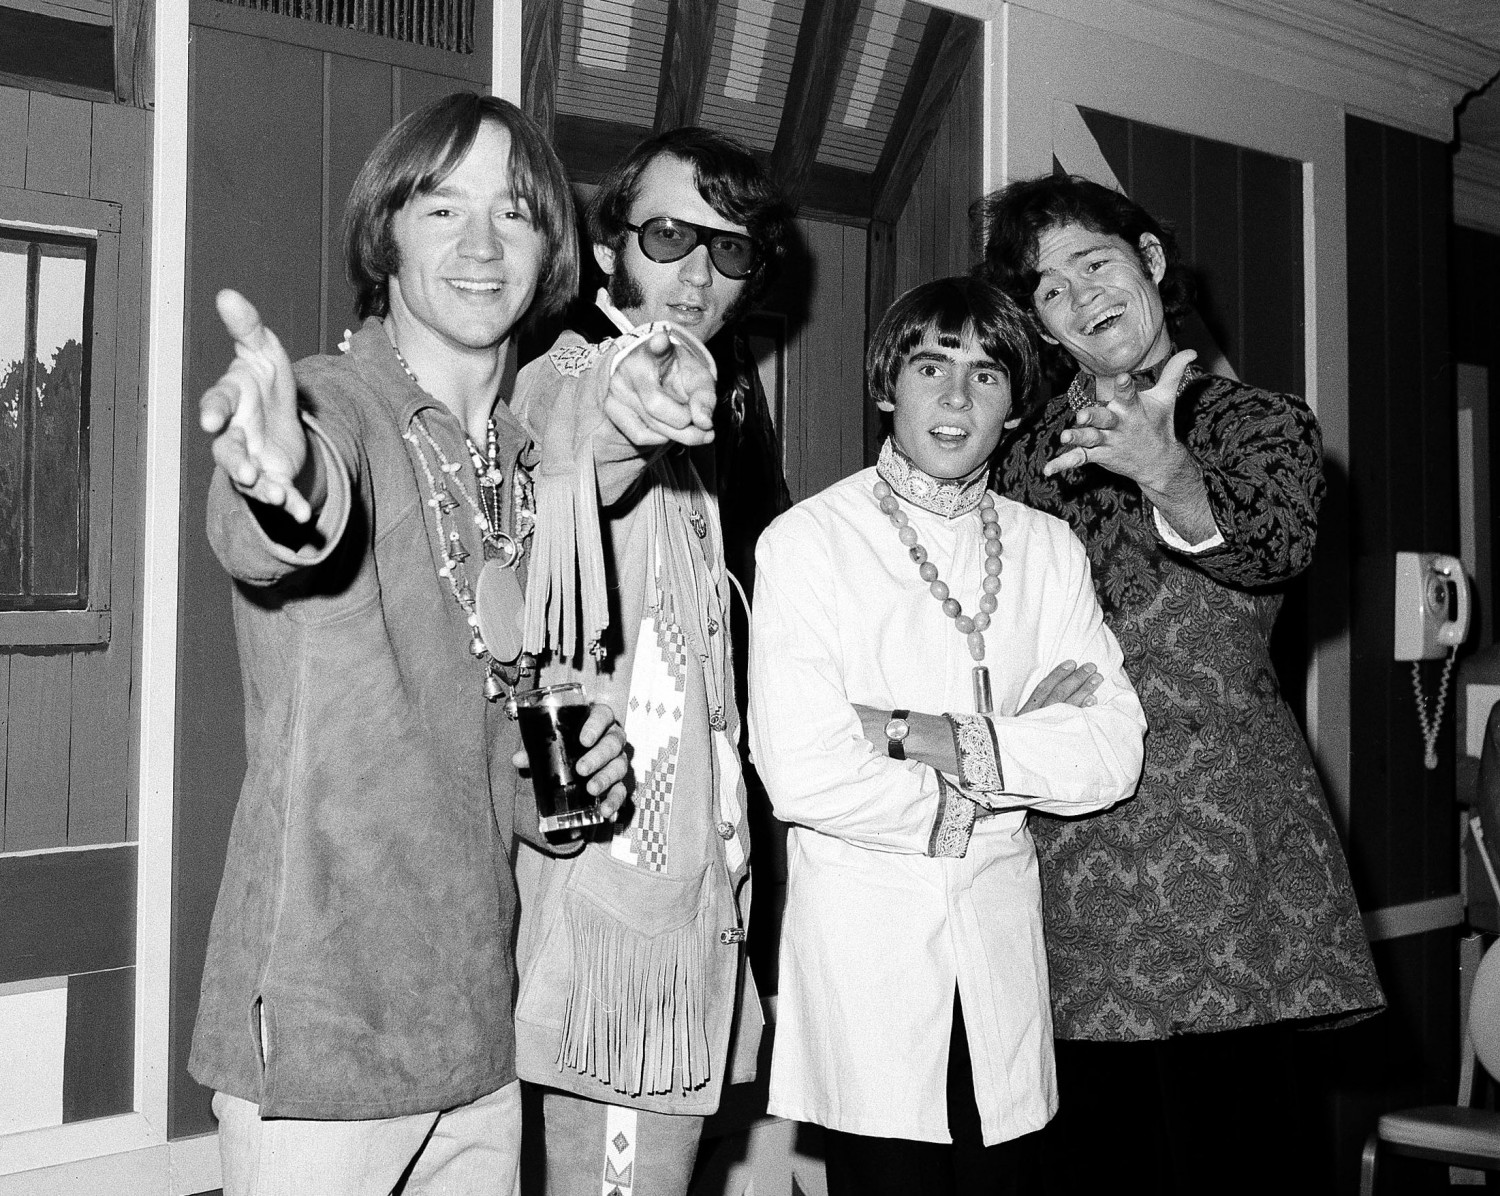 The Monkees’ Peter Tork Dies at 77: Reports